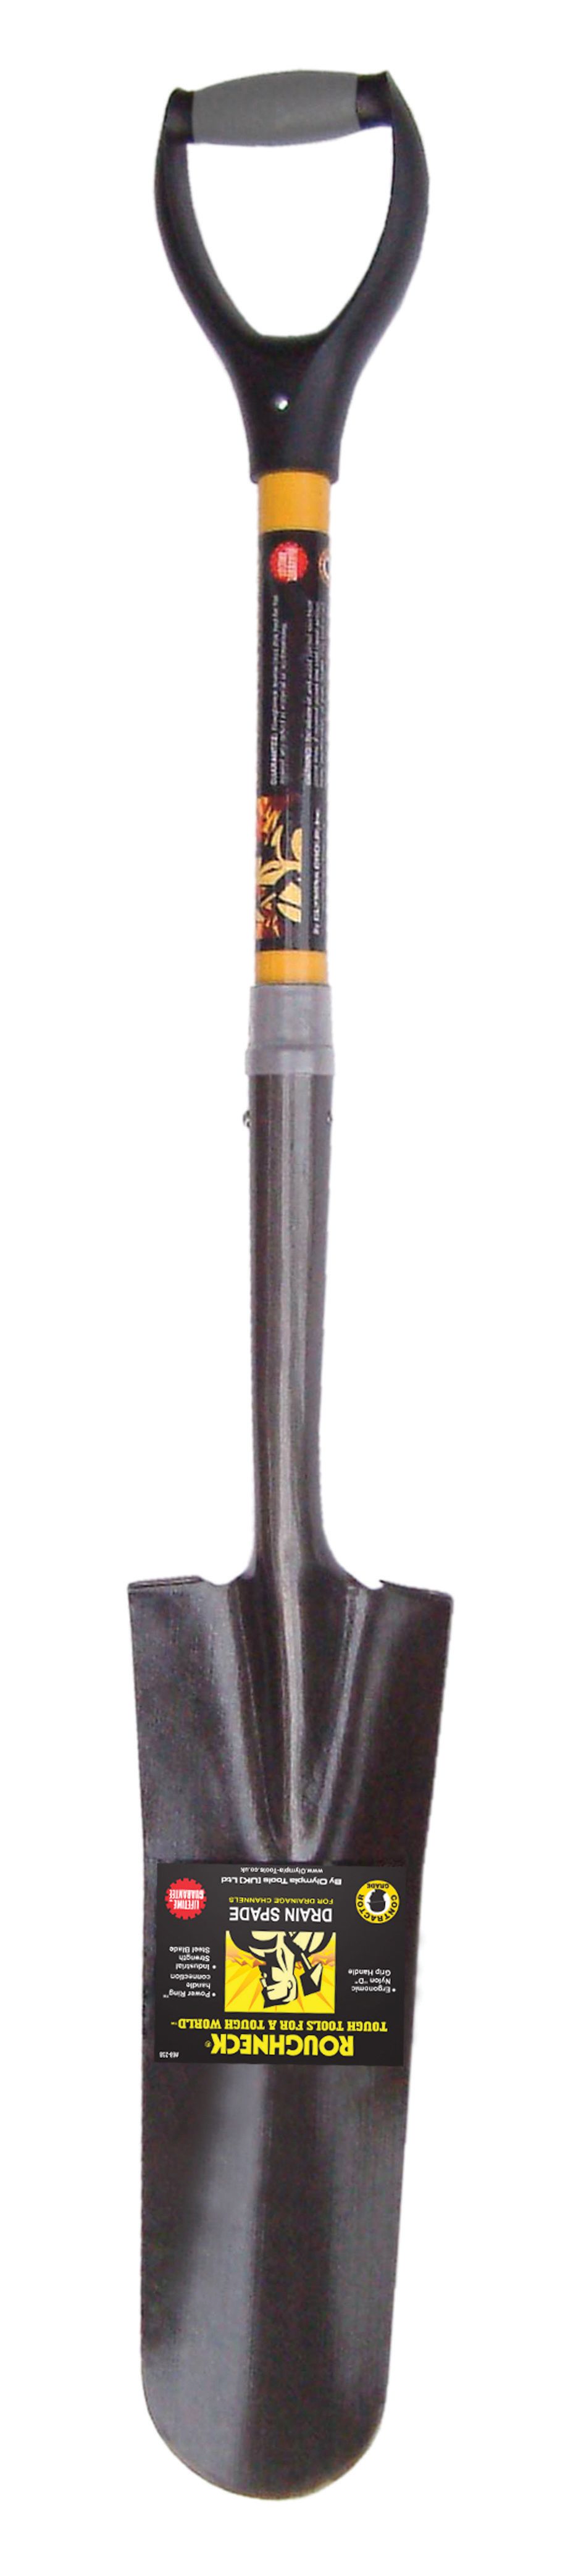 Image of Roughneck Fibreglass Handle Drainage Shovel